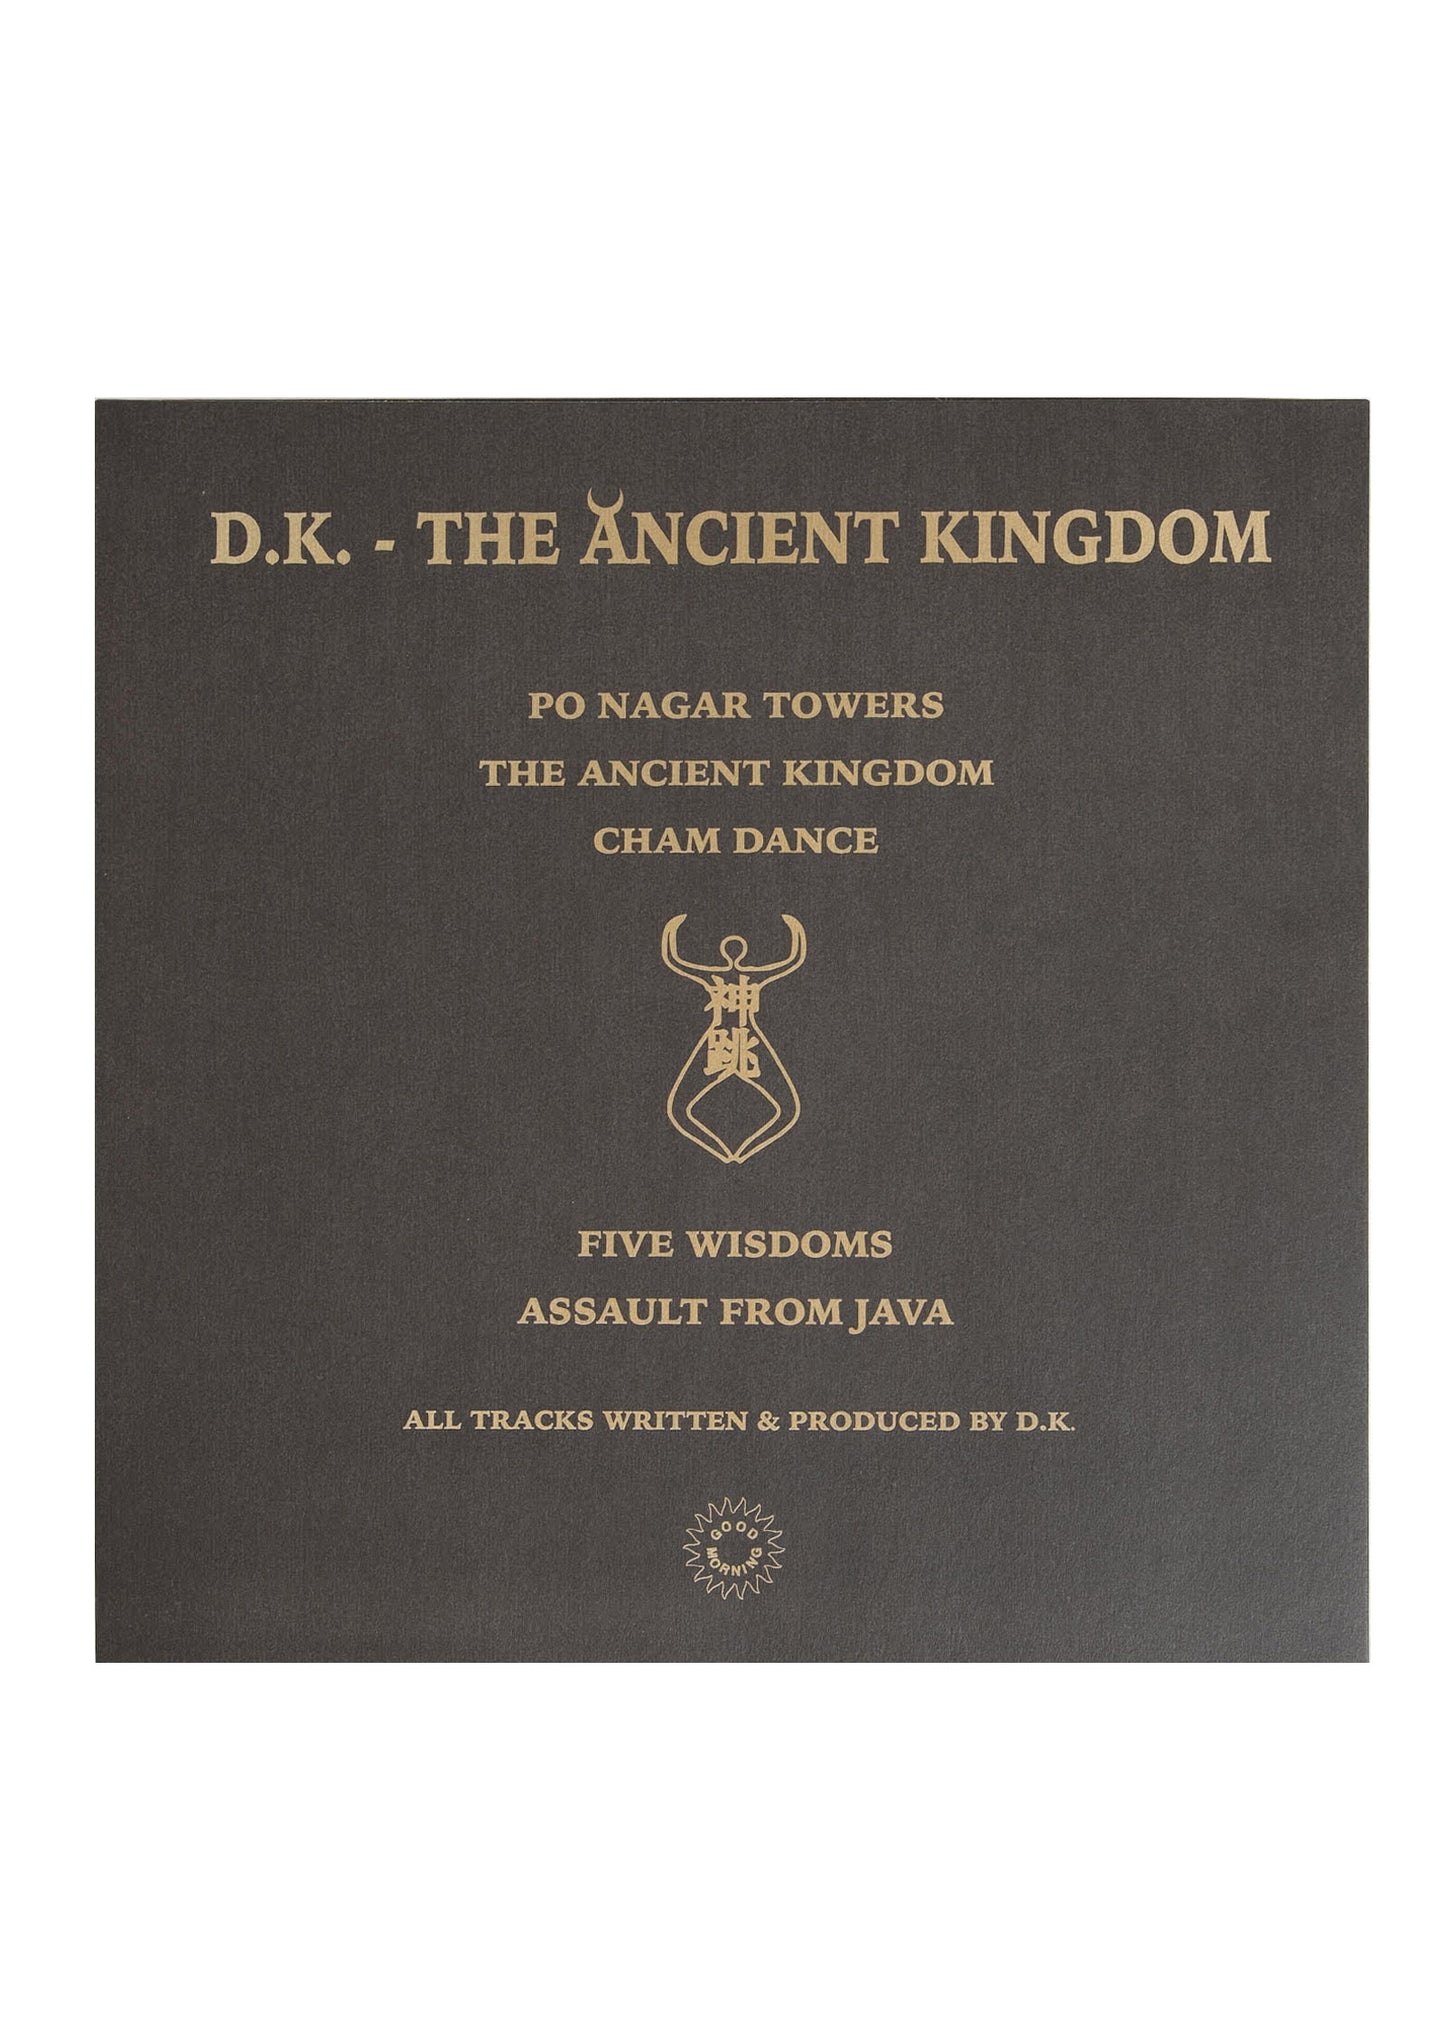 GMV08 D.K. - THE ANCIENT KINGDOM 12"